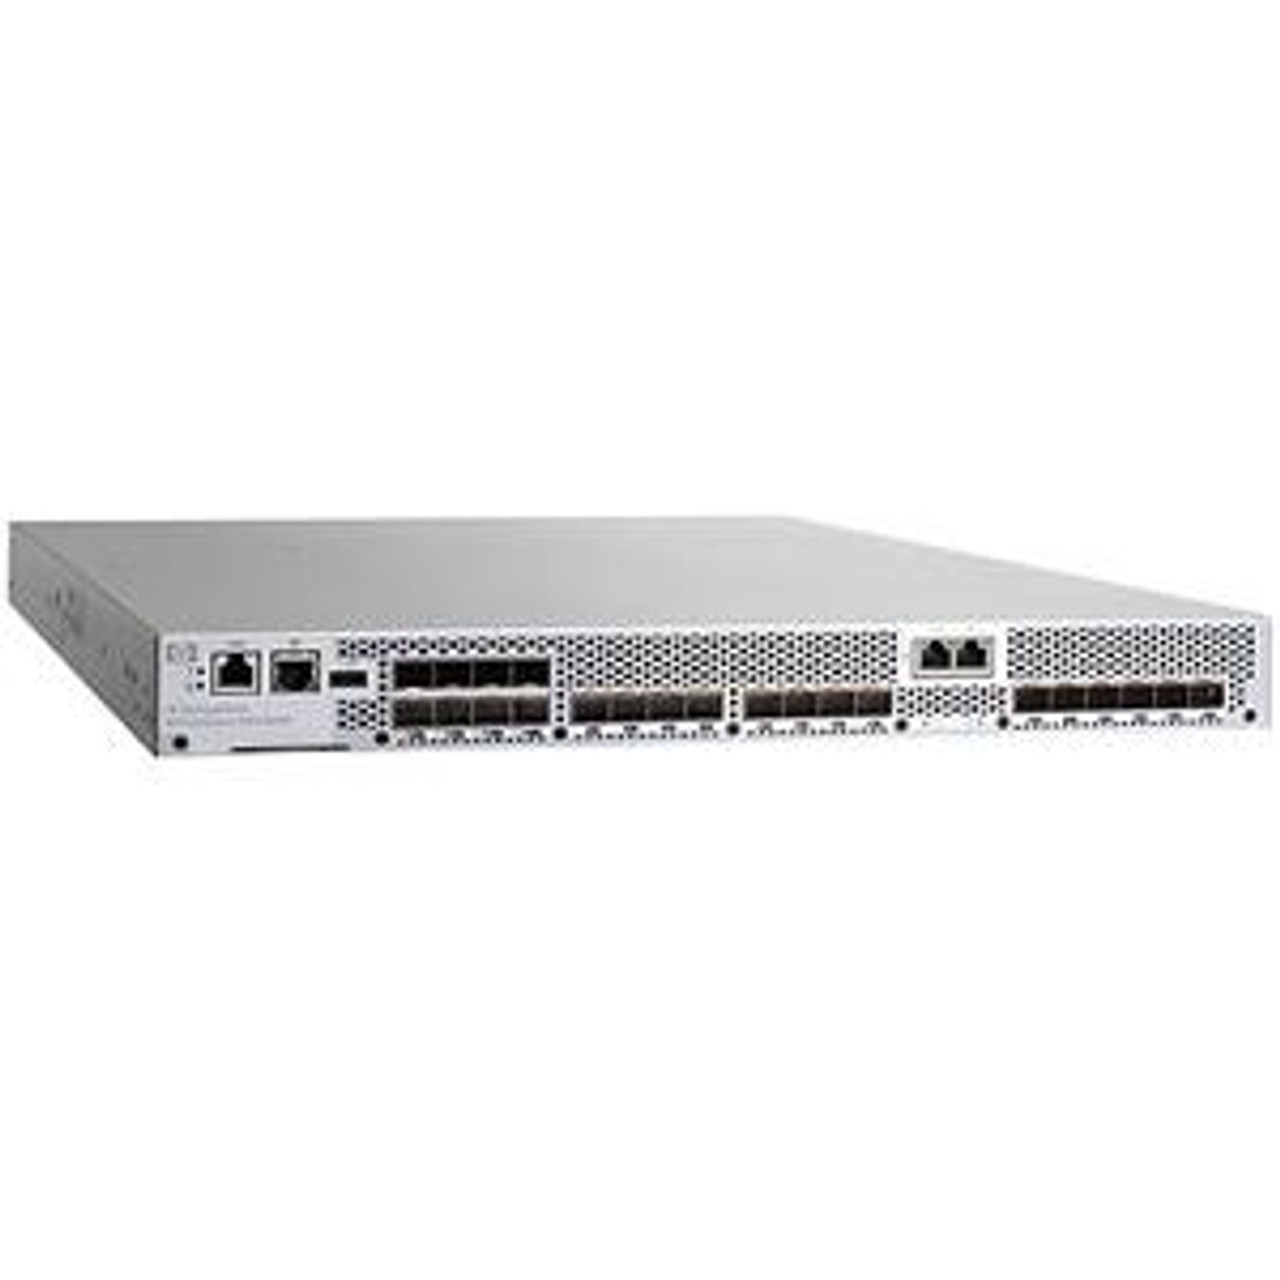 AP864A#ABA HP 1606 Fcip 22-Ports 8Gbps SFP+ Fibre Channel 10/100/1000 Base-T Rack-mountable 1U Gigabit Ethernet Switch (Refurbished)